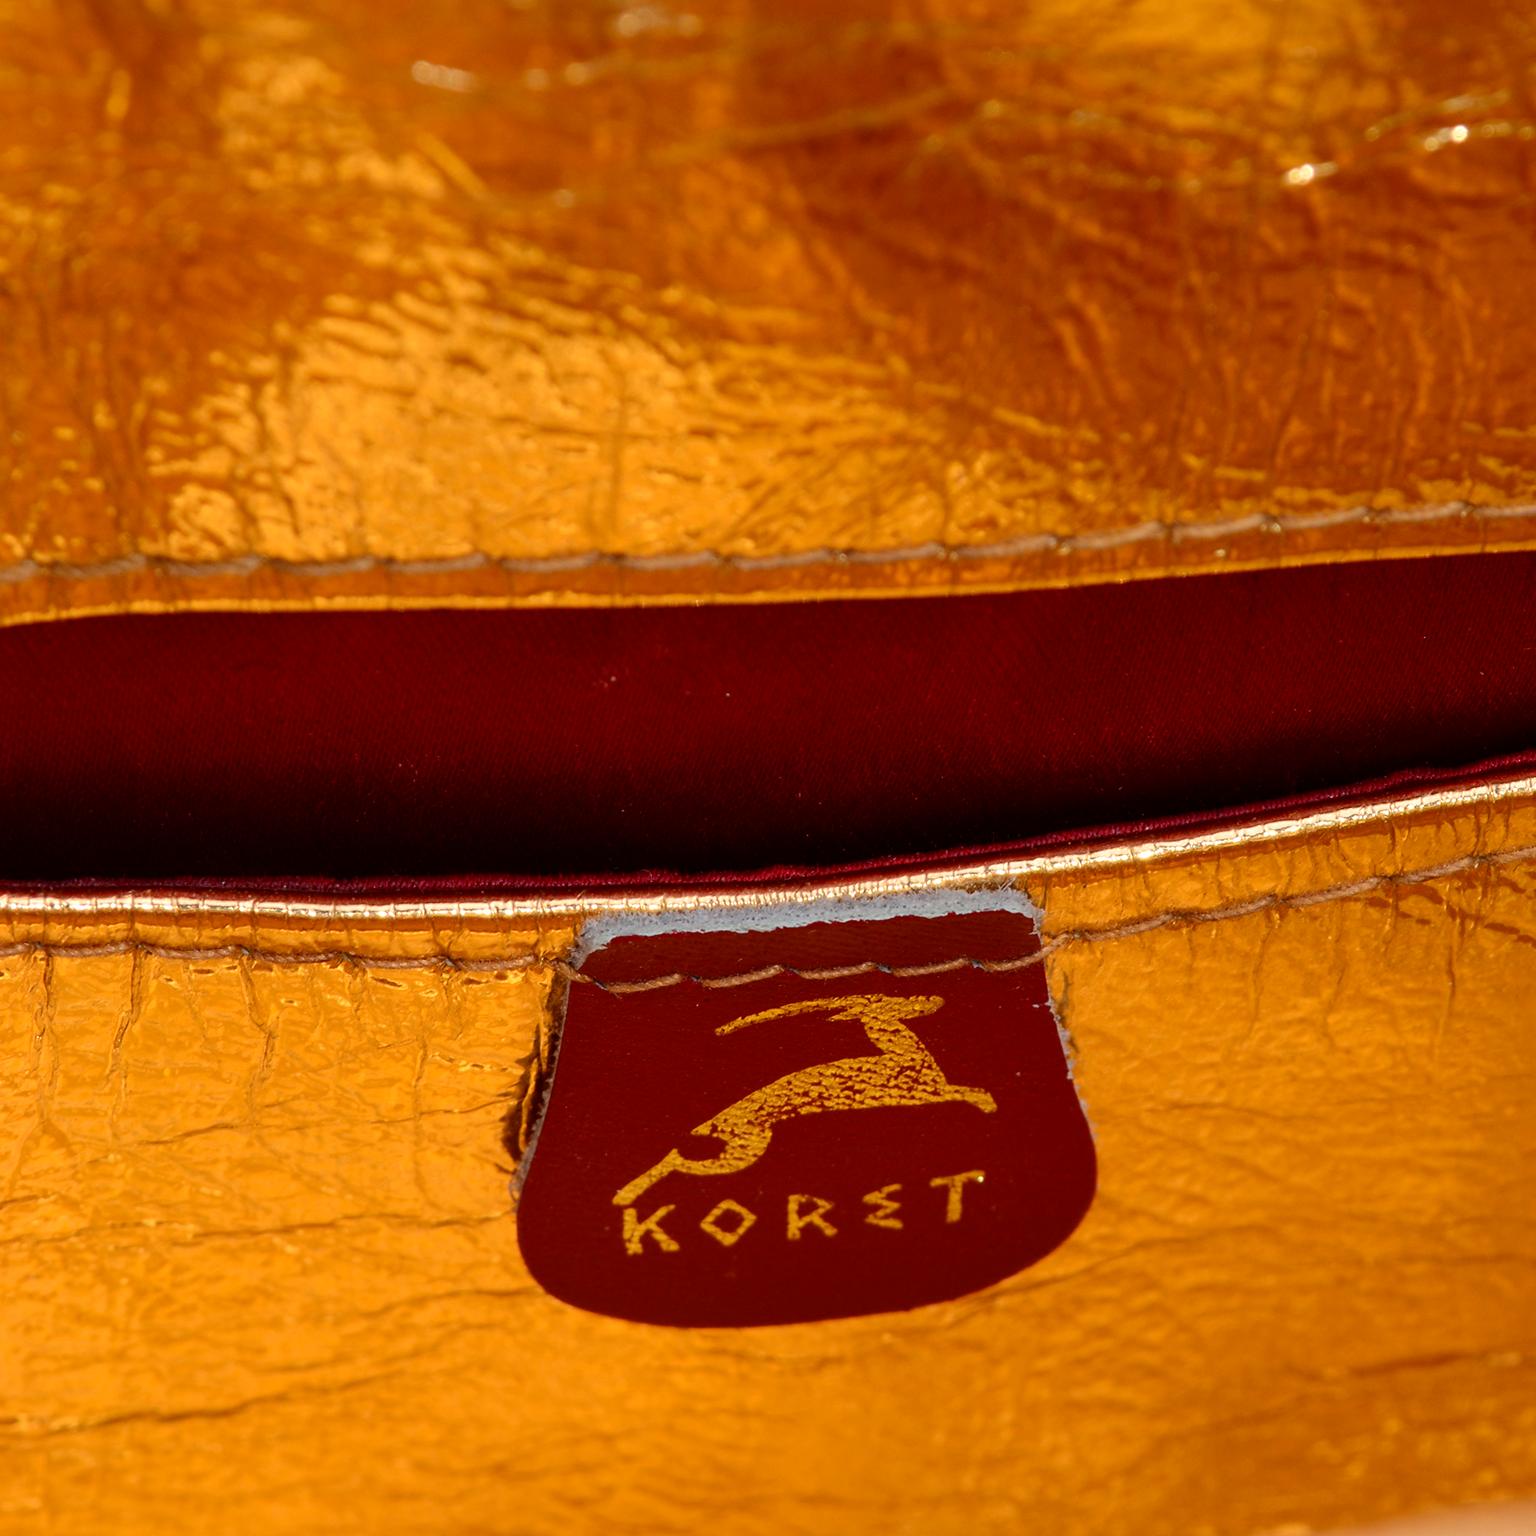 Koret Vintage Handbag in Gold & Silver Woven Metal Top Handle Day or Evening Bag 1